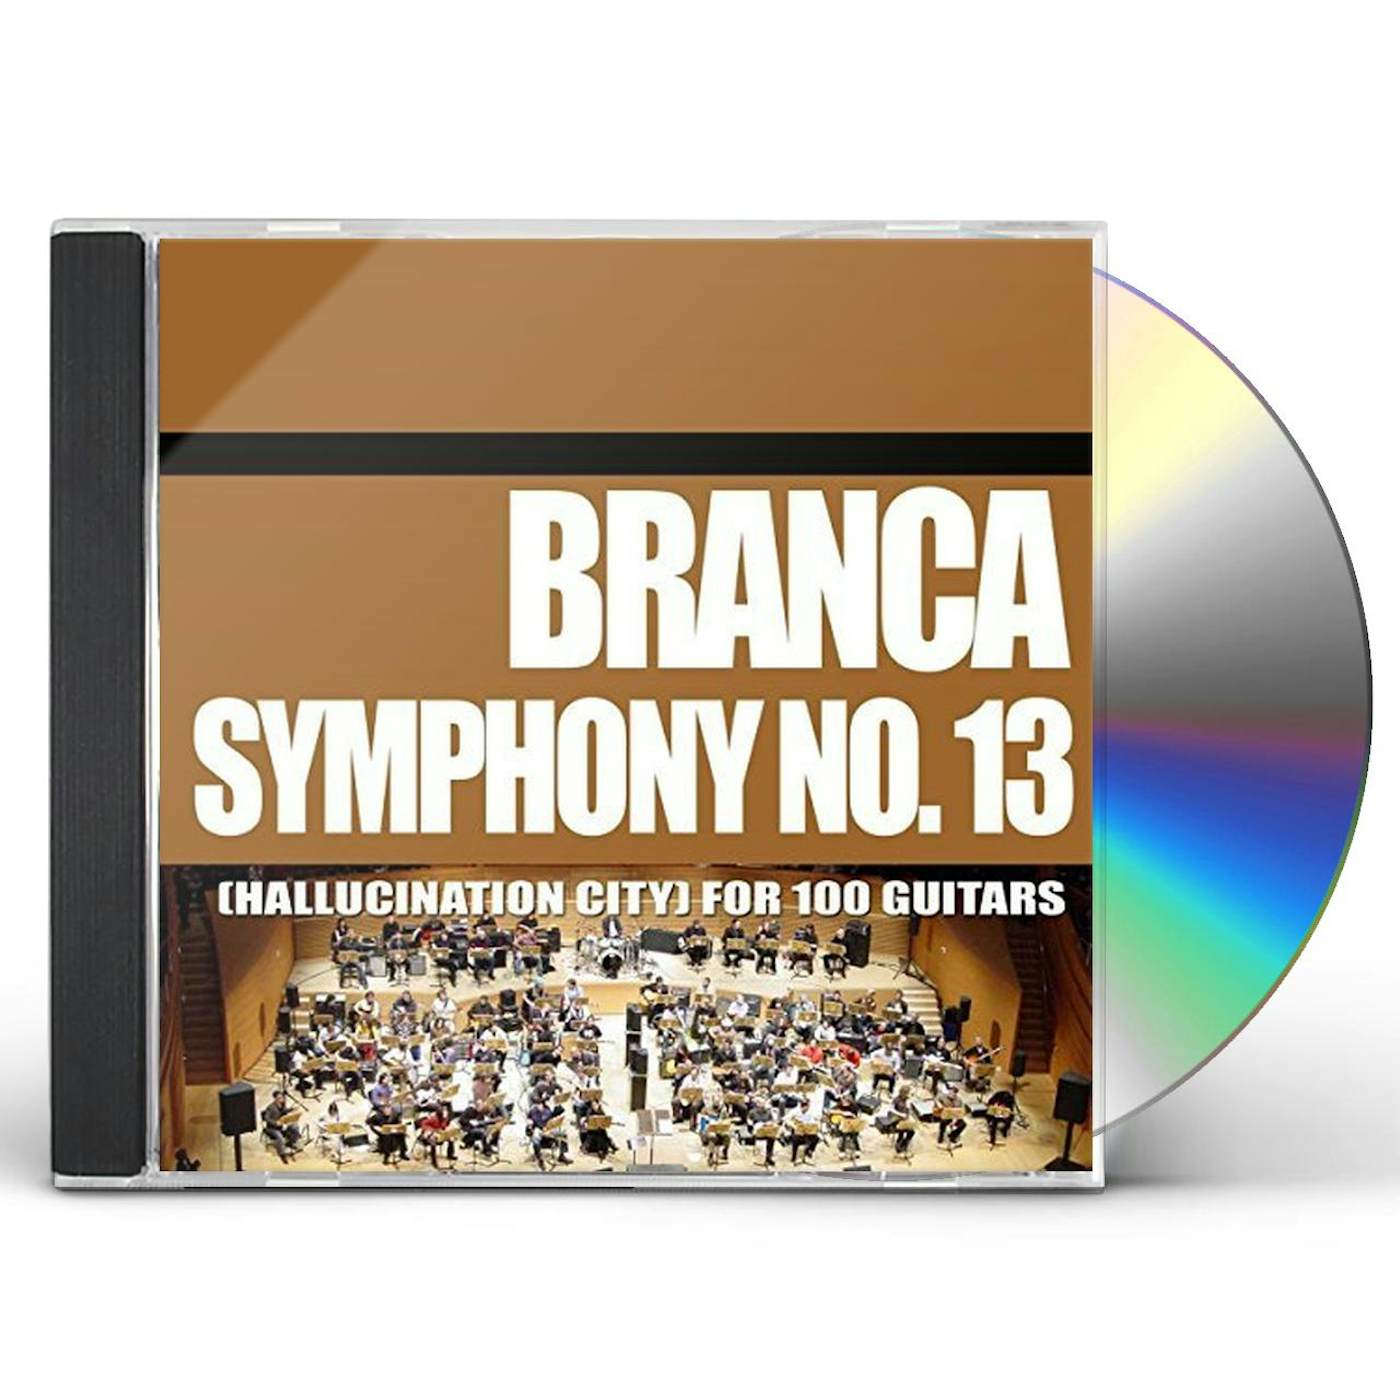 Glenn Branca SYMPHONY 13 (HALLUCINATION CITY) FOR 100 GUITARS CD